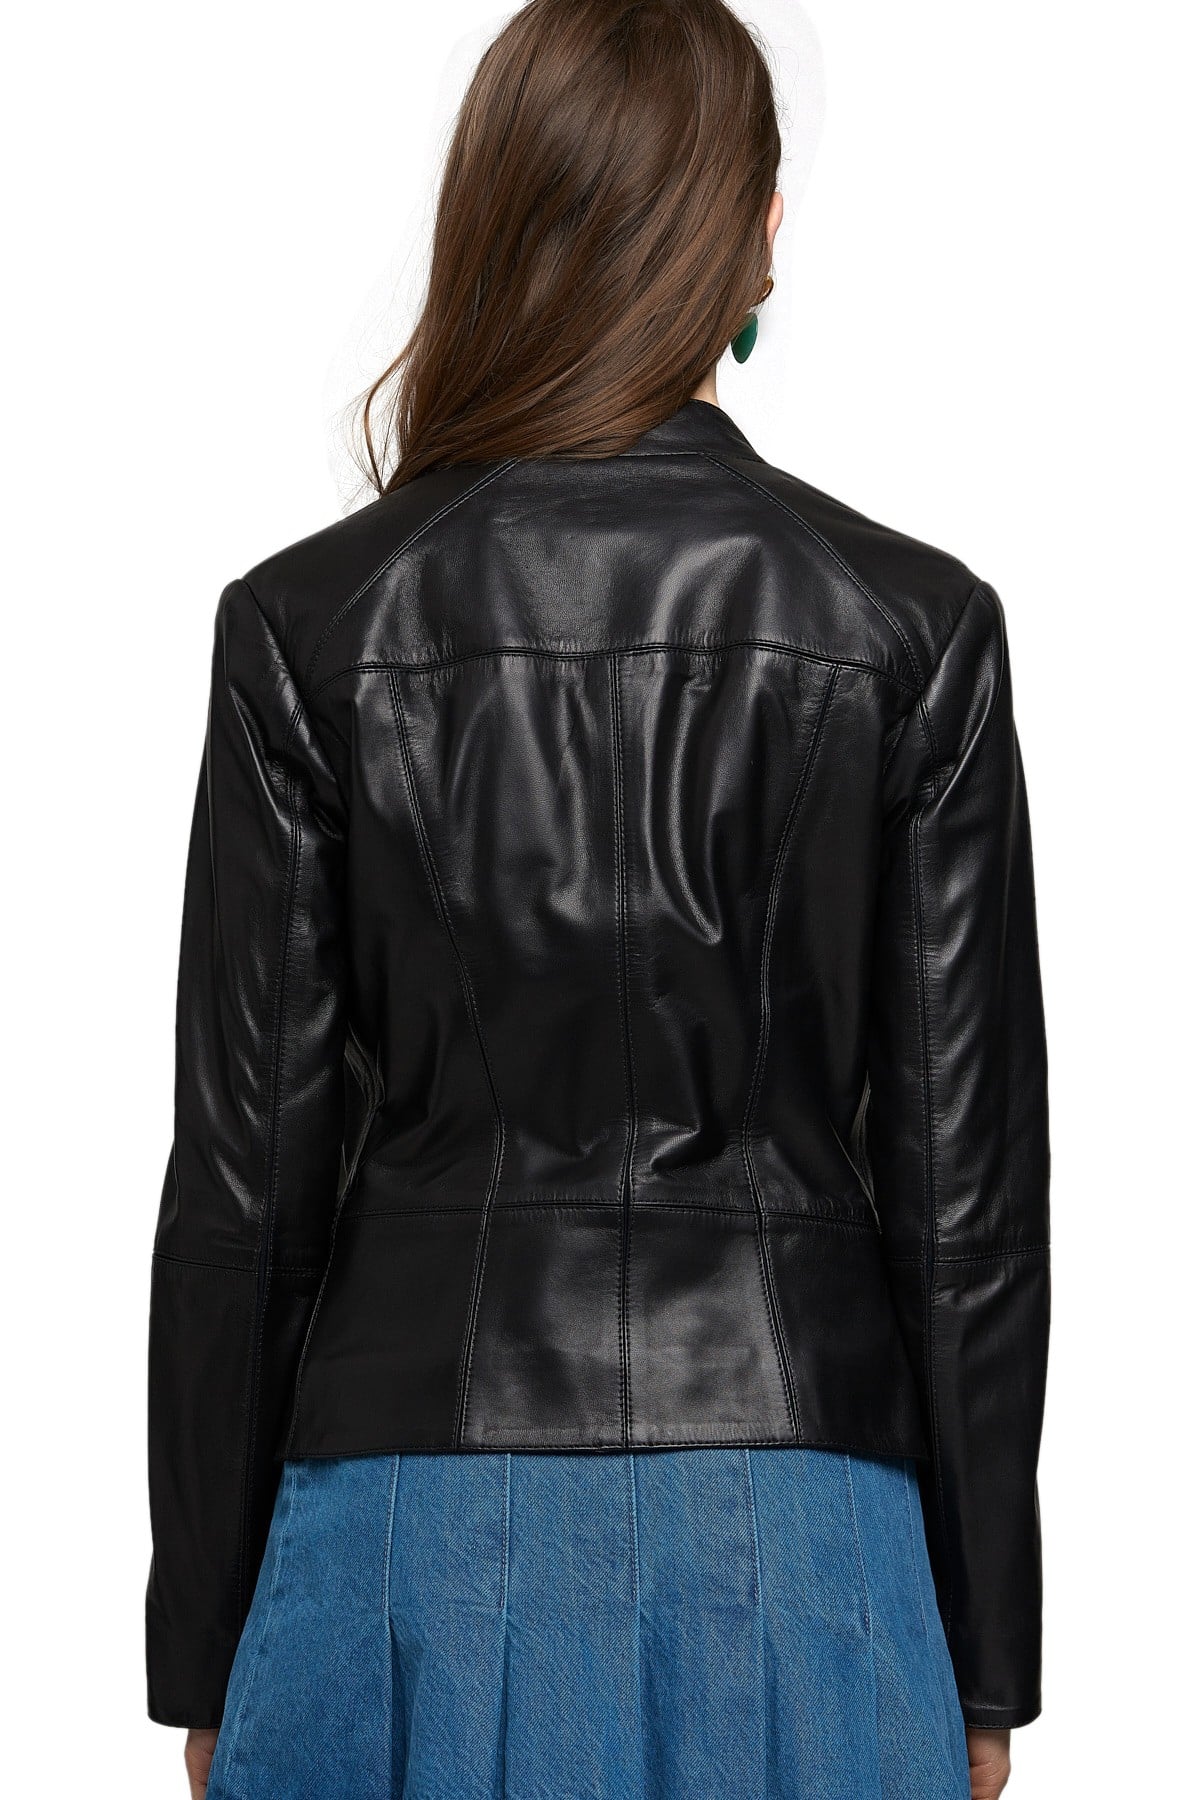 Ladies Leather Moto Jacket in Florida, USA